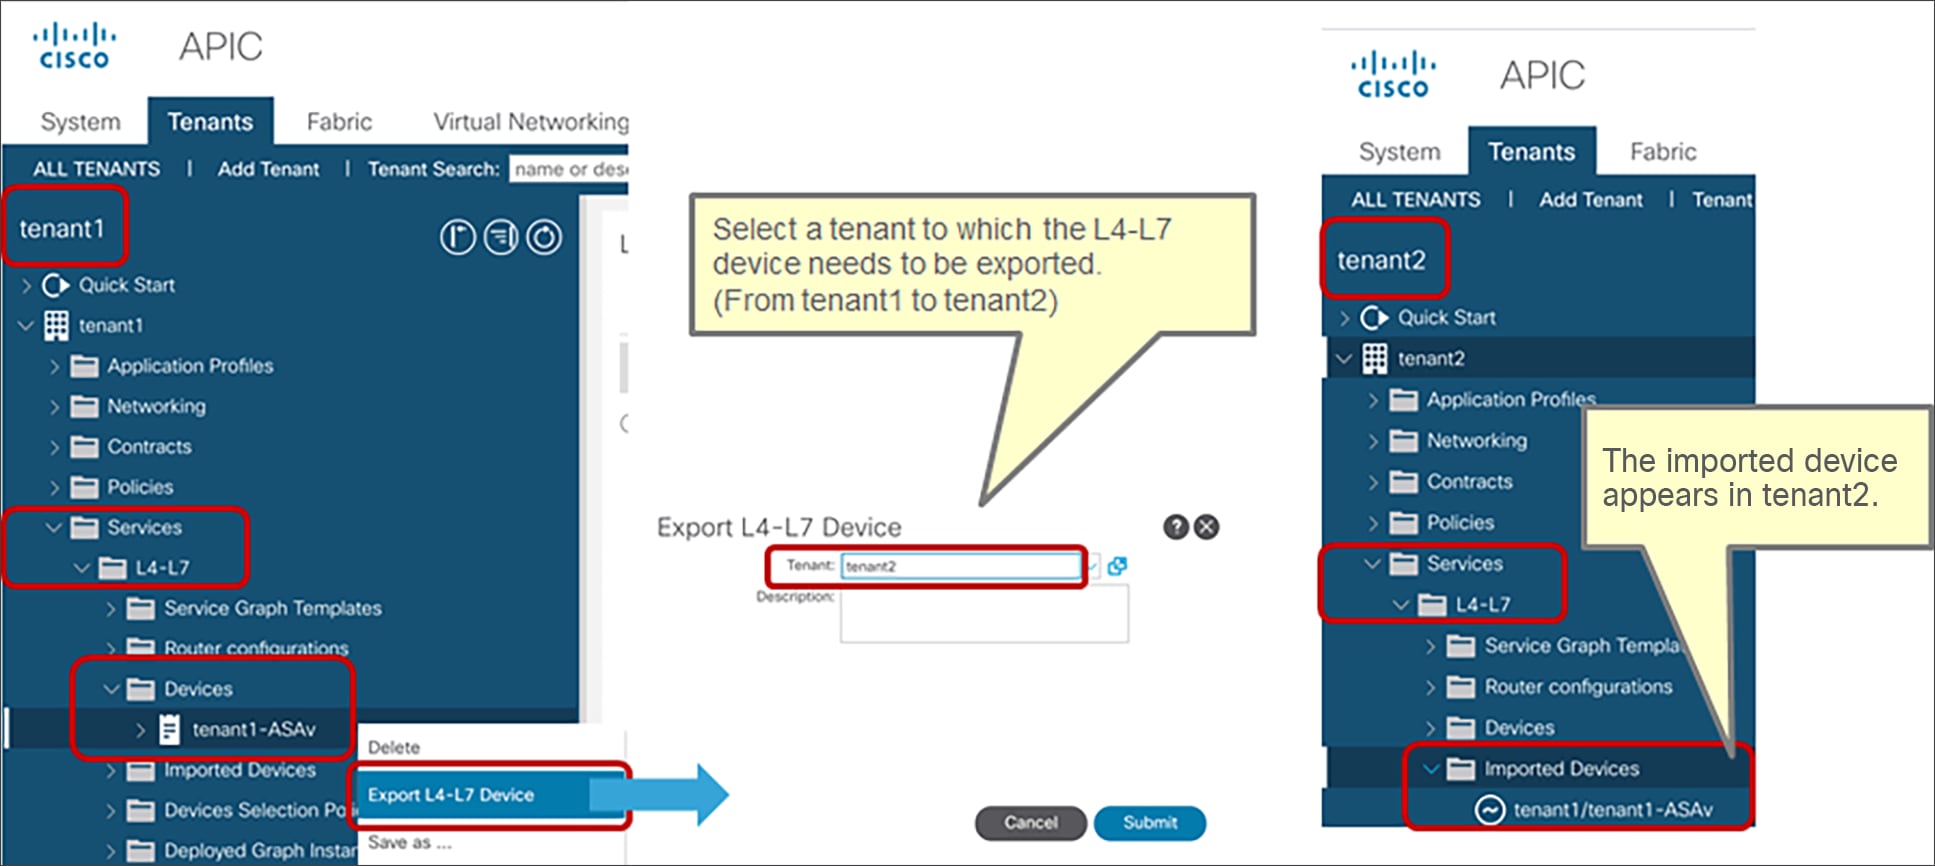 L4-L7 device configuration on Cisco APIC